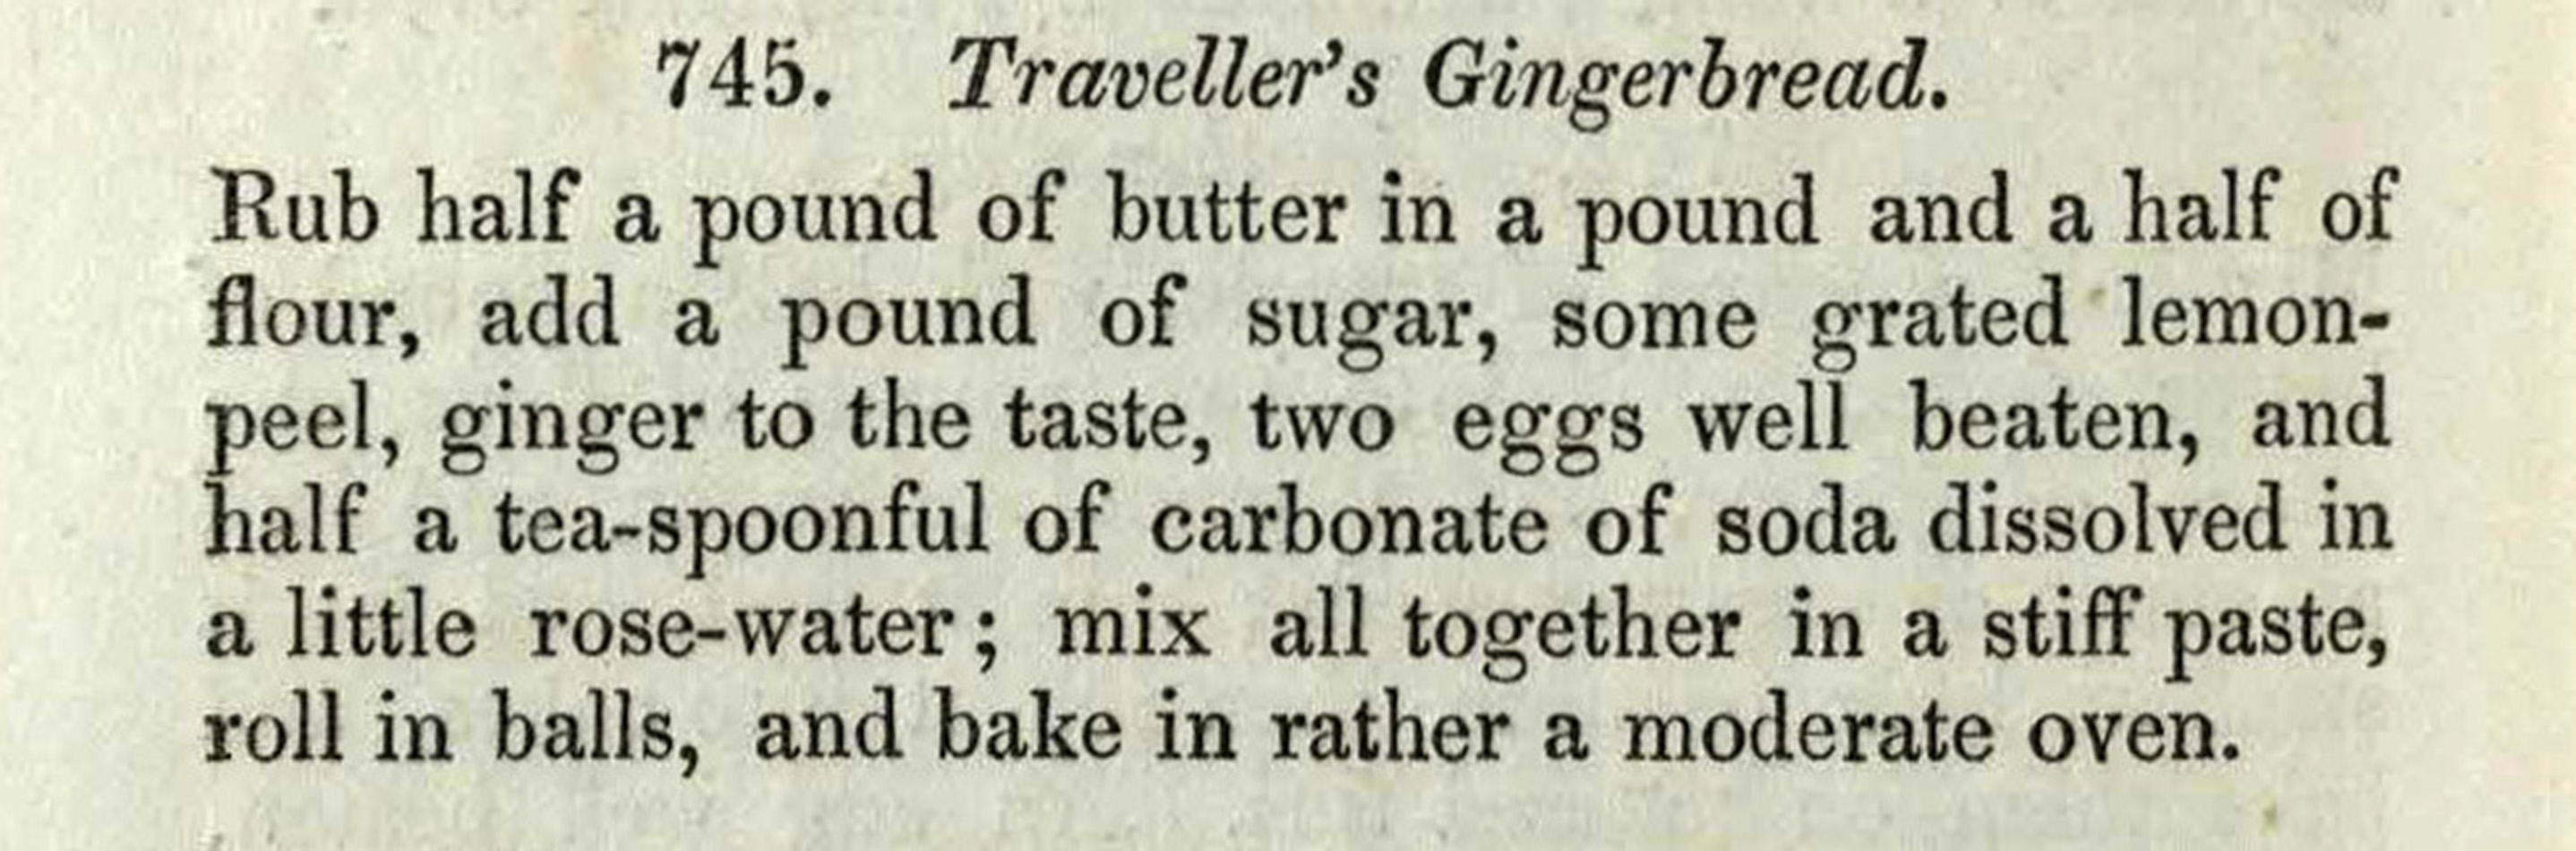 Traveller's Gingerbread recipe_1